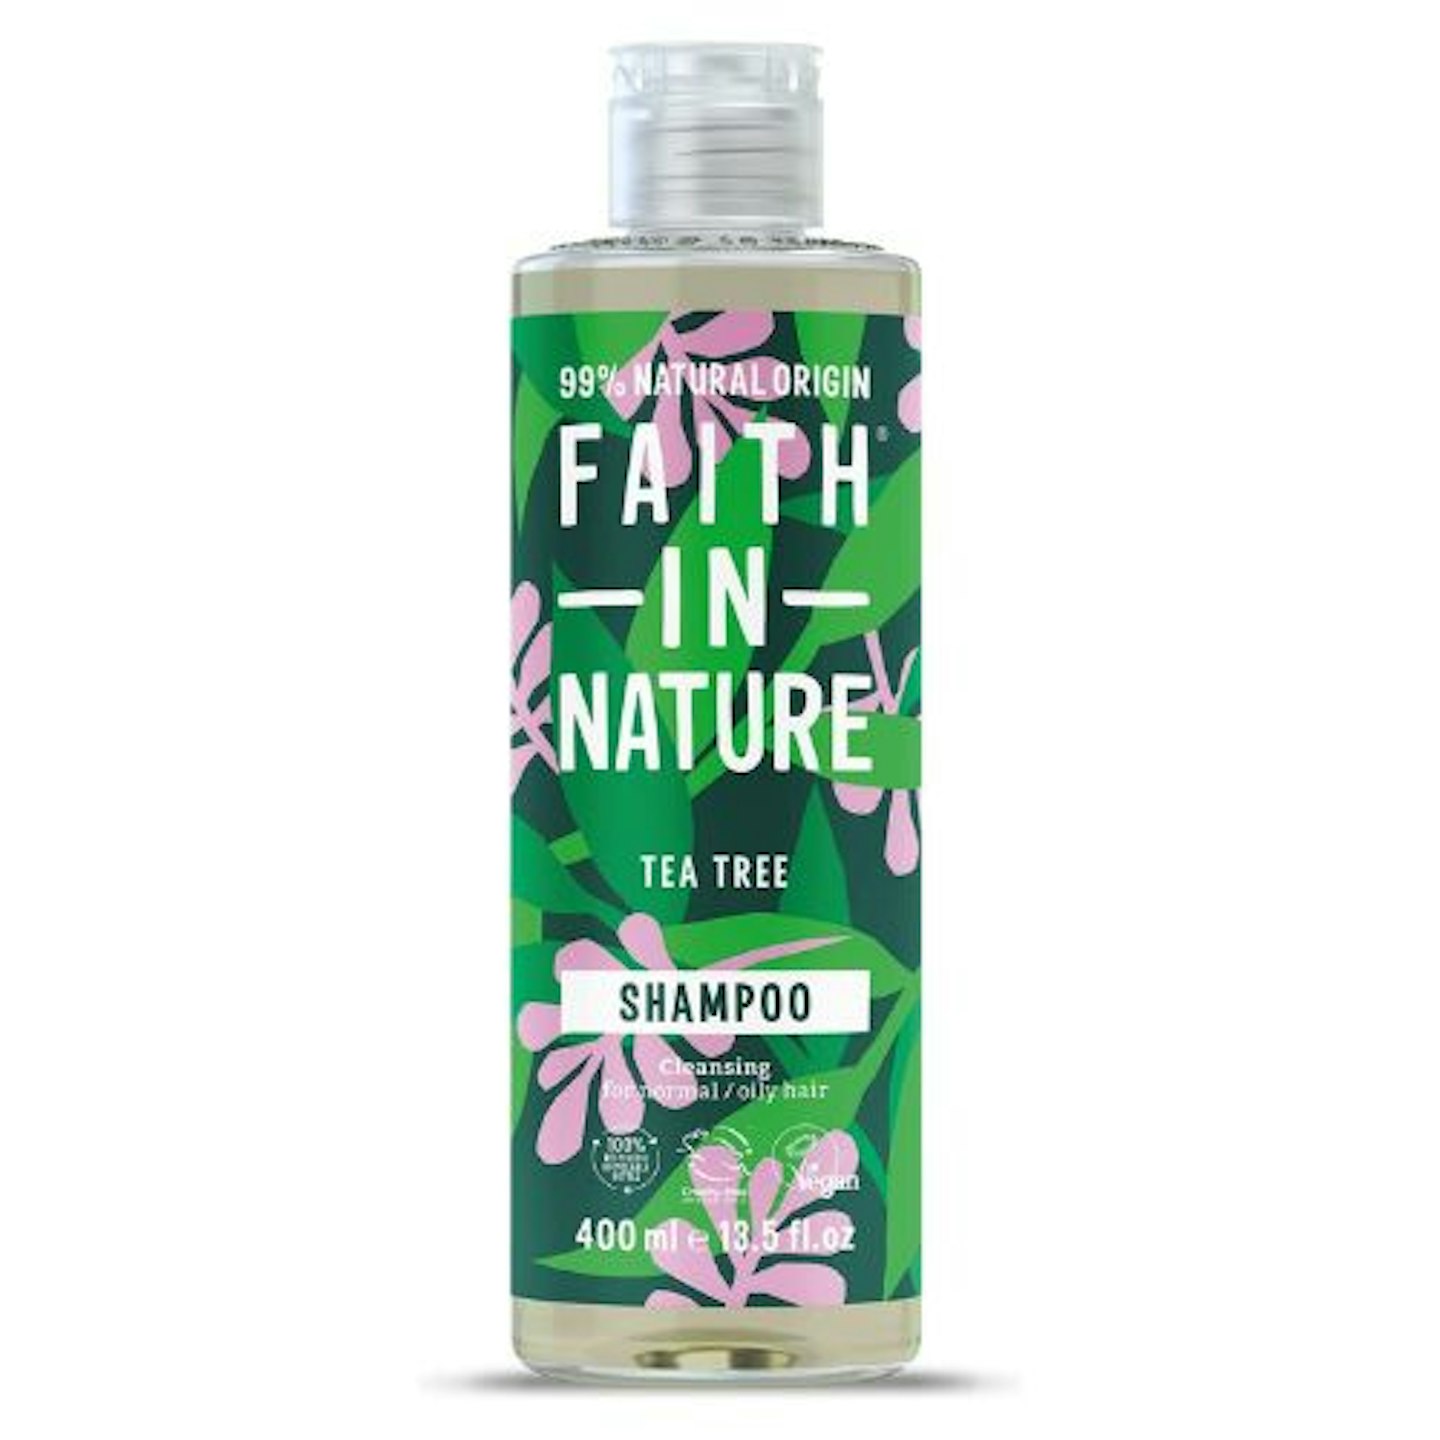 Faith in Nature Natural Tea Tree Cleansing Shampoo